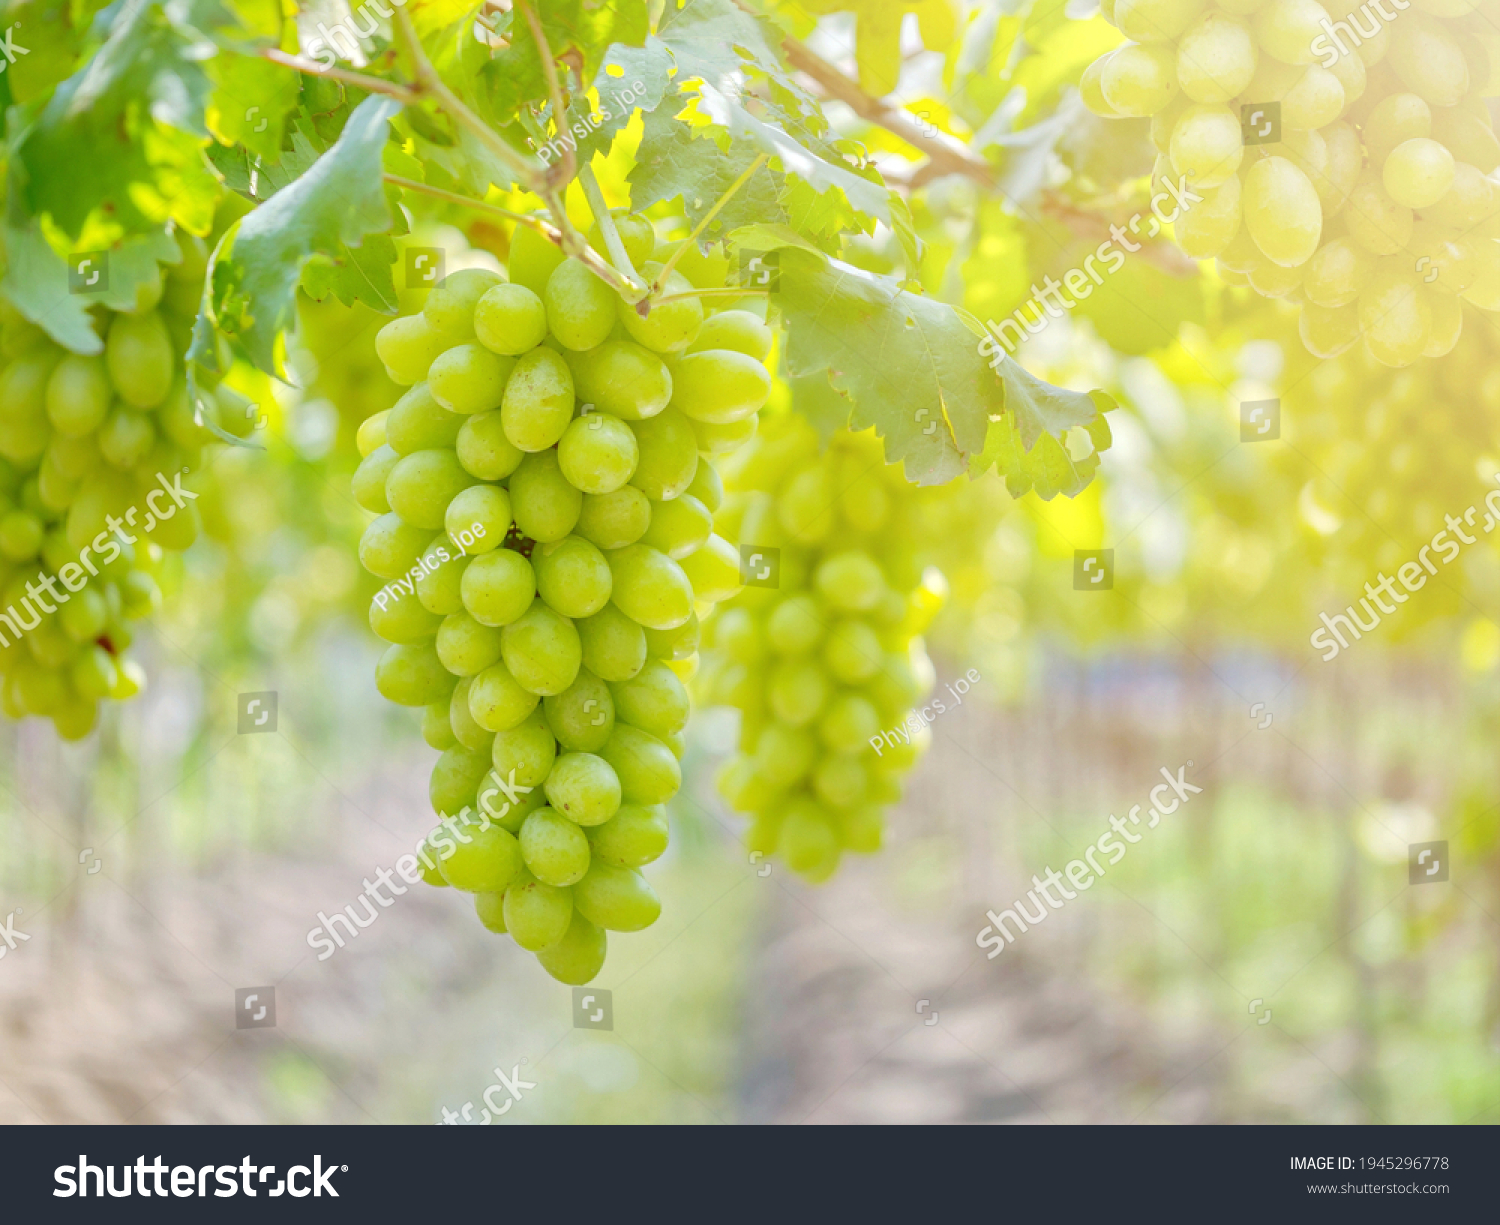 Ripe green grape in vineyard. Grapes green taste sweet growing natural. Green grape on the vine in garden #1945296778